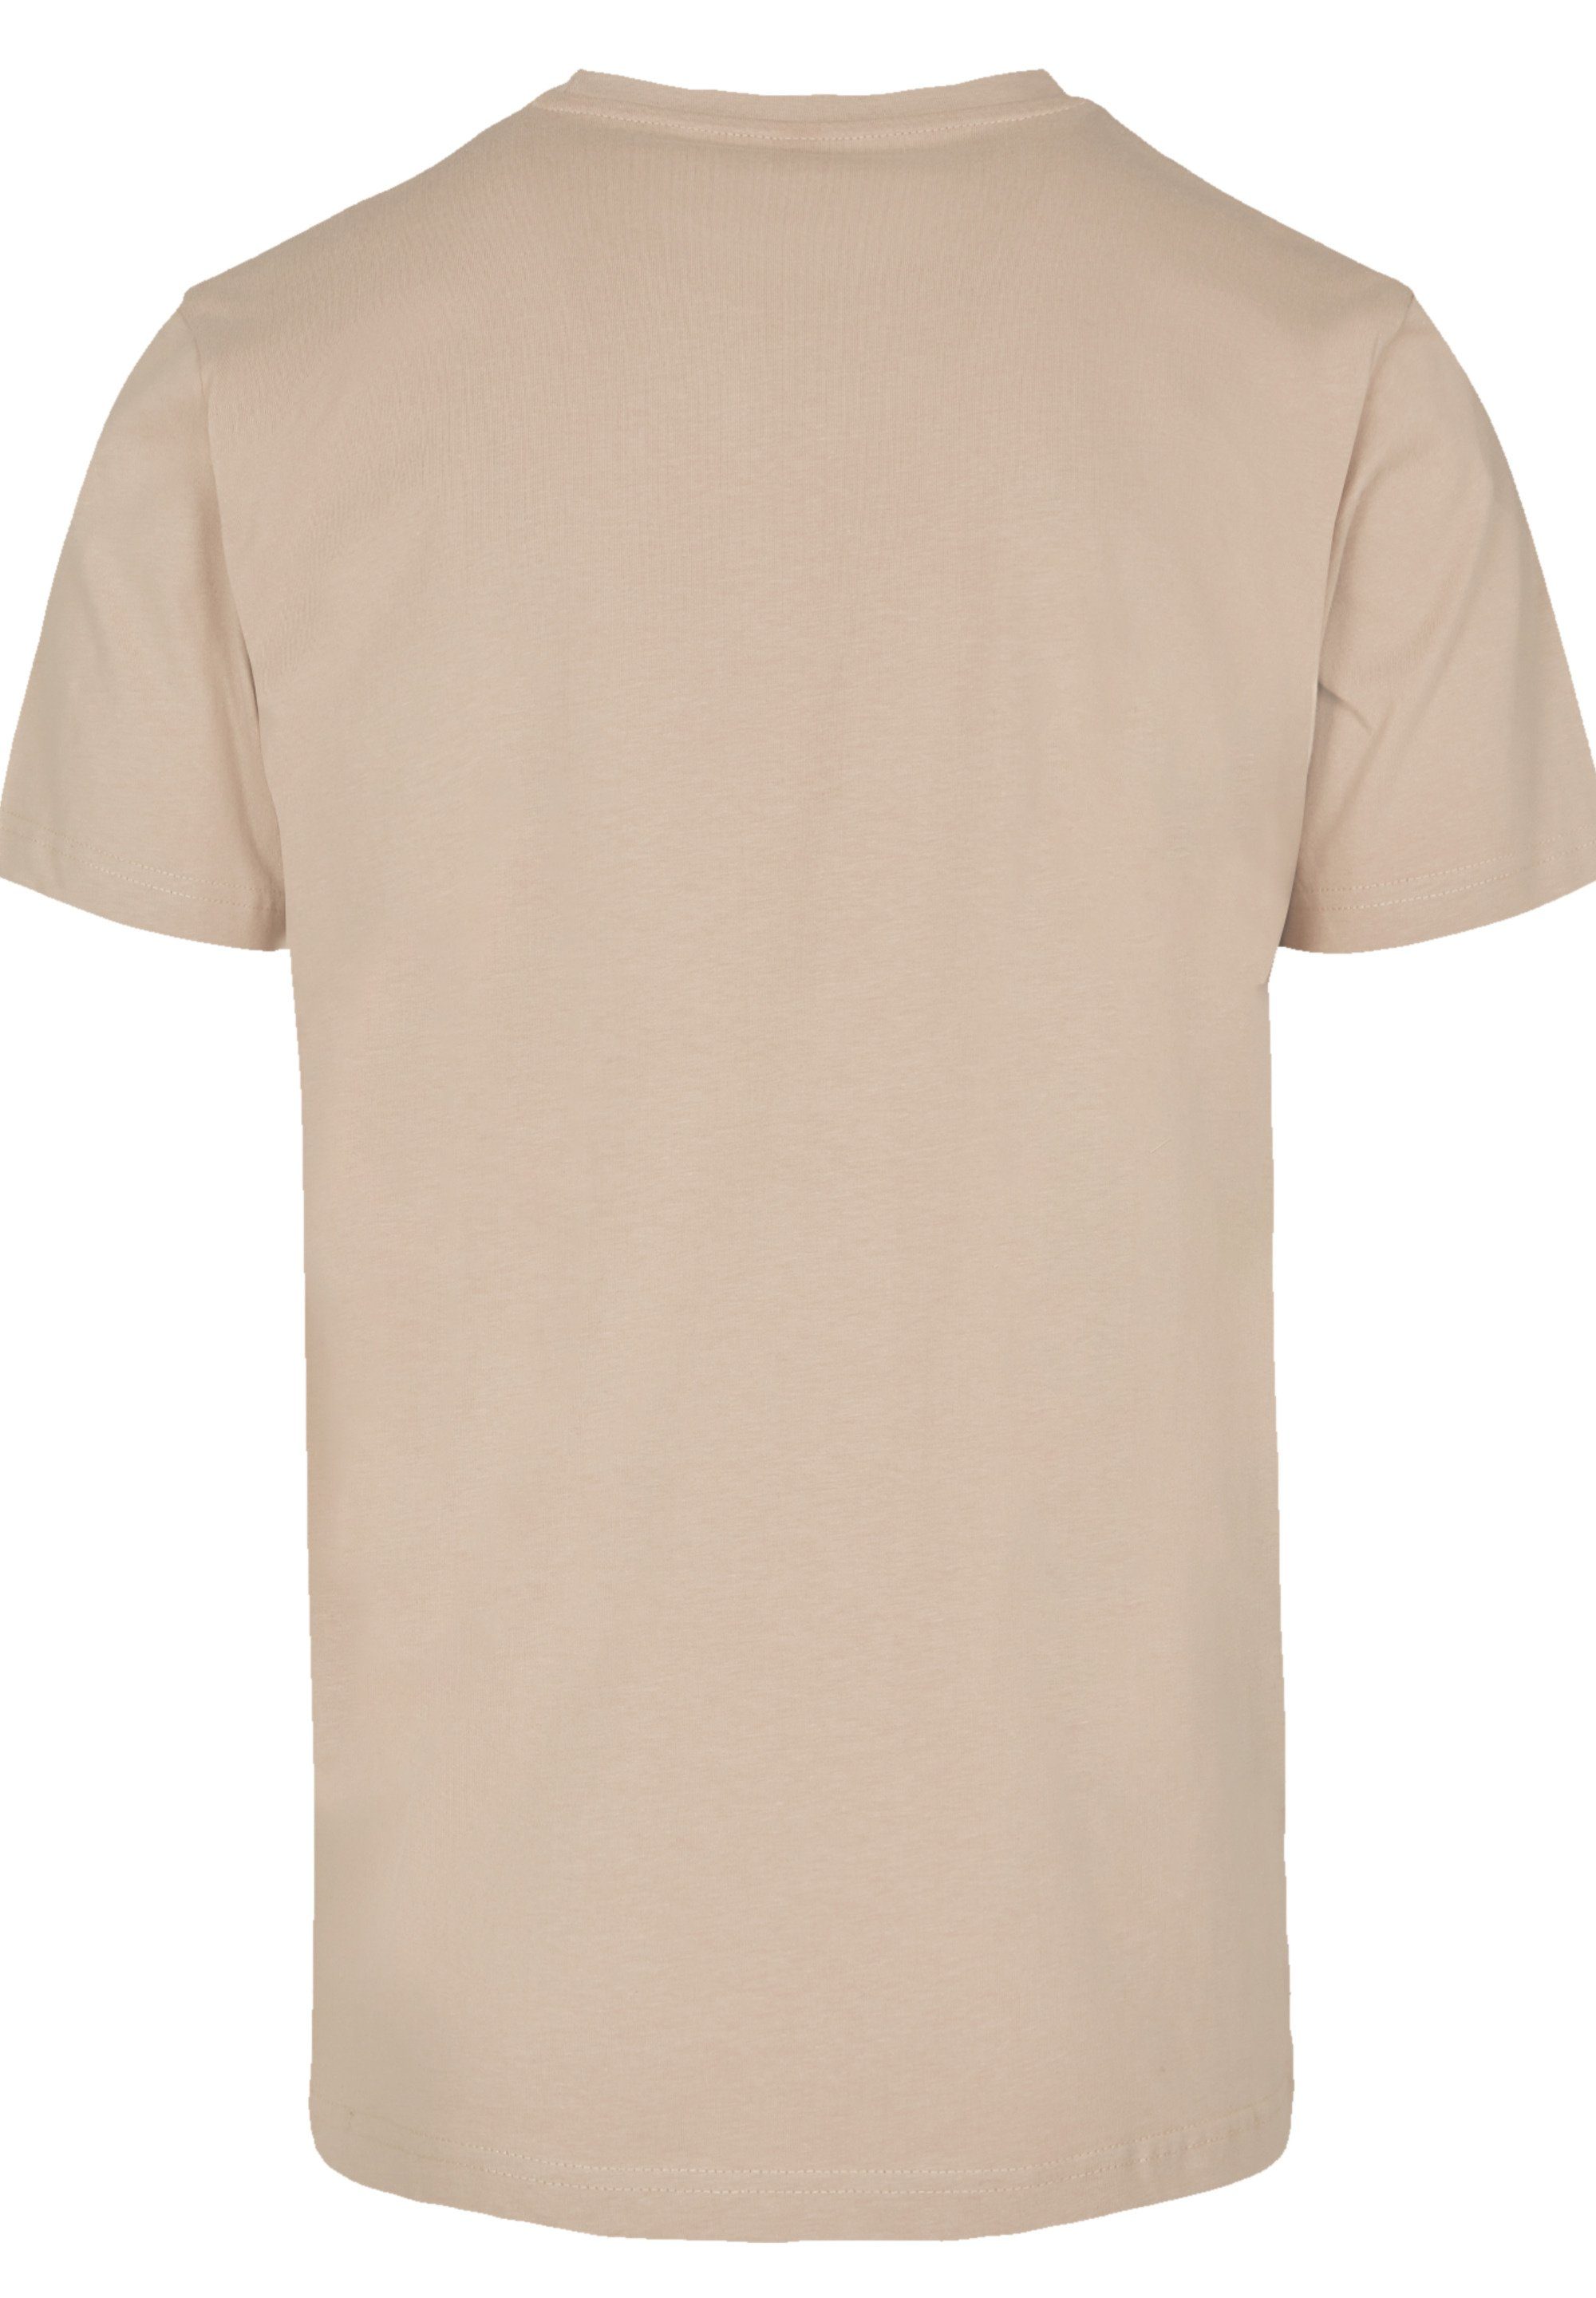 F4NT4STIC sand Crest Print T-Shirt Classic Queen